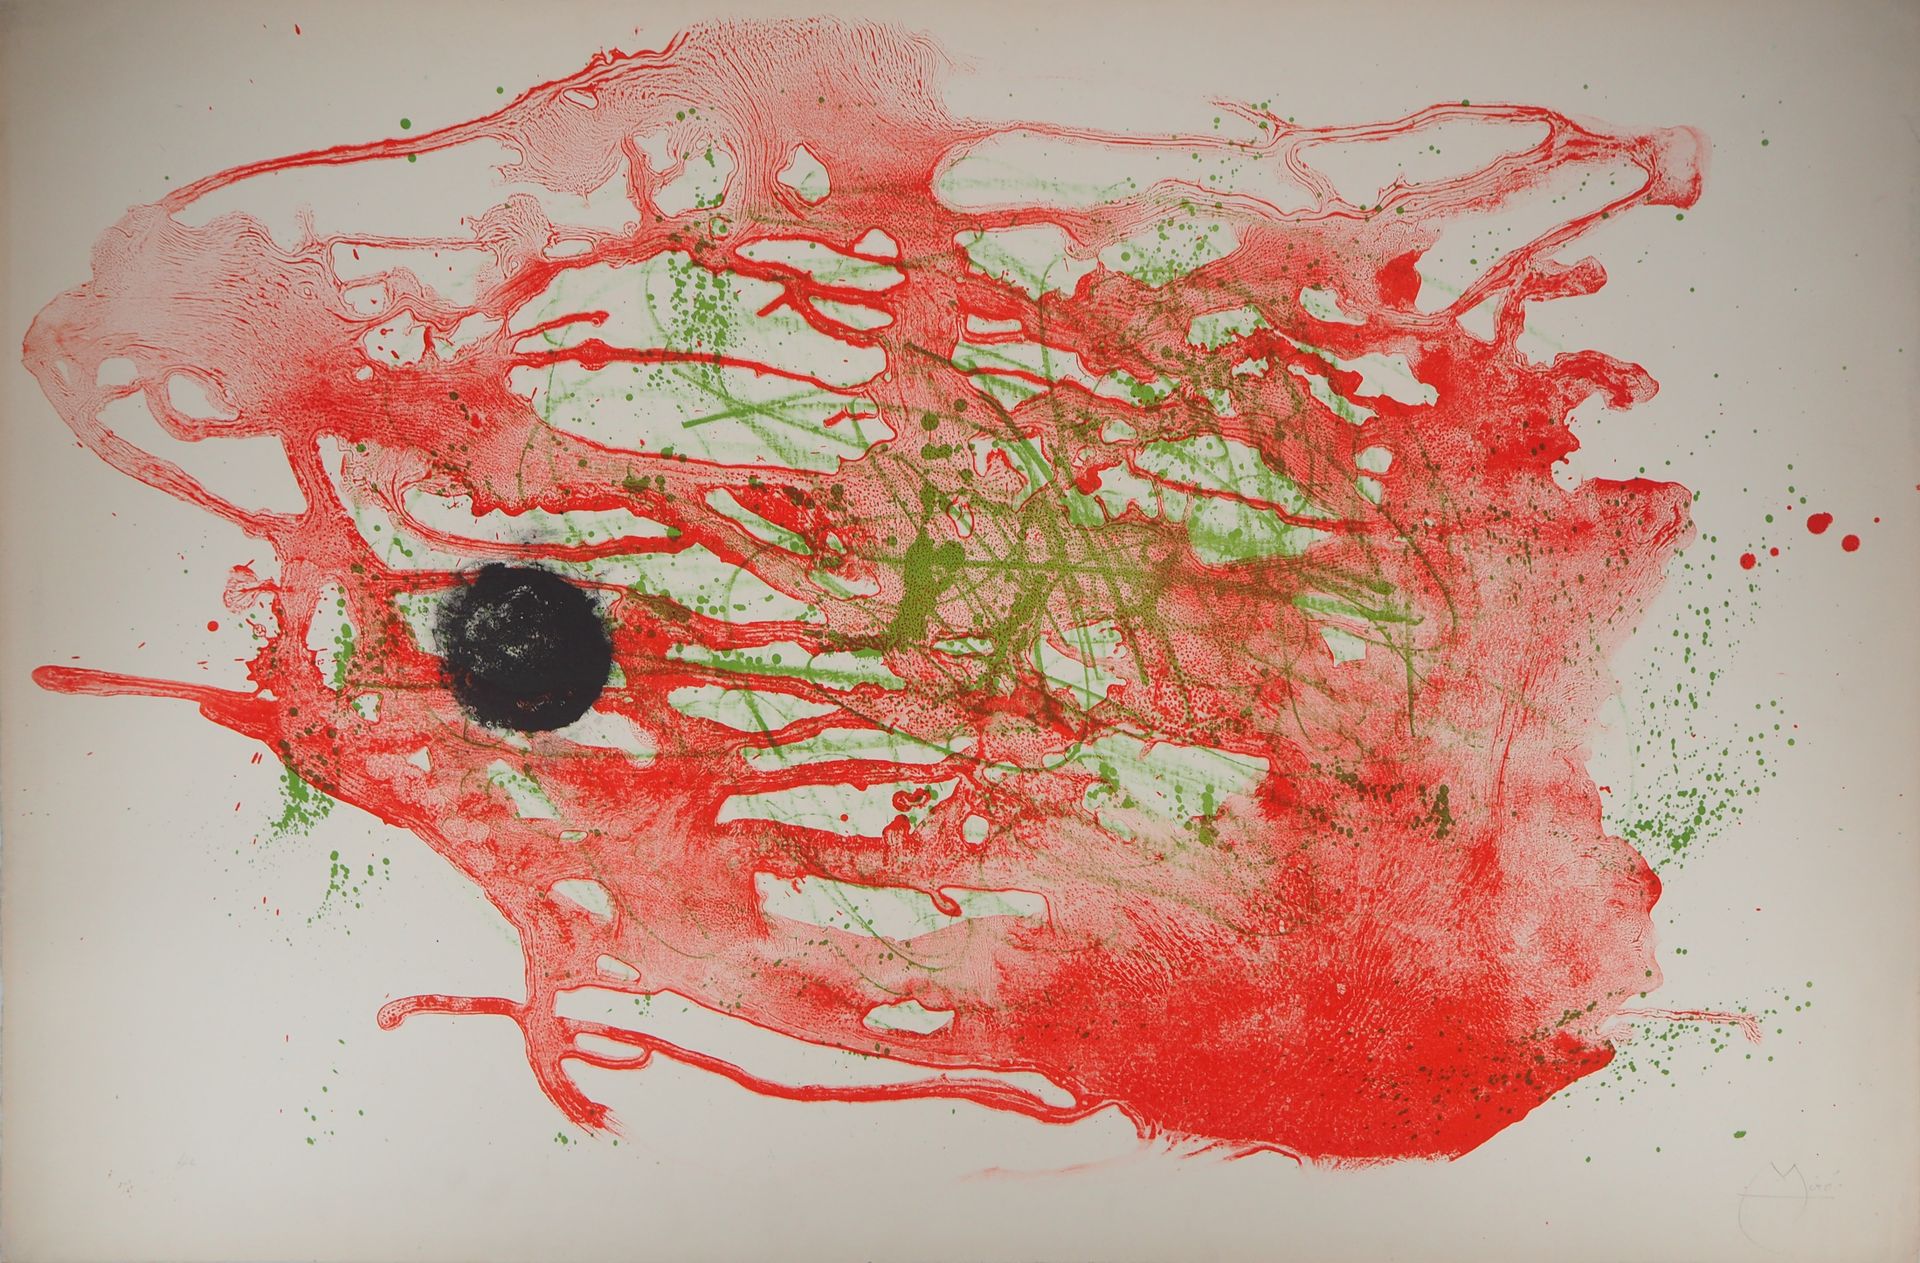 Joan Miro 琼-米罗 (1893-1983)

系列一：《红洗》，1961年

原始石版画

用铅笔签名

合理的H.C.(30份以外的版本)

在BF&hellip;